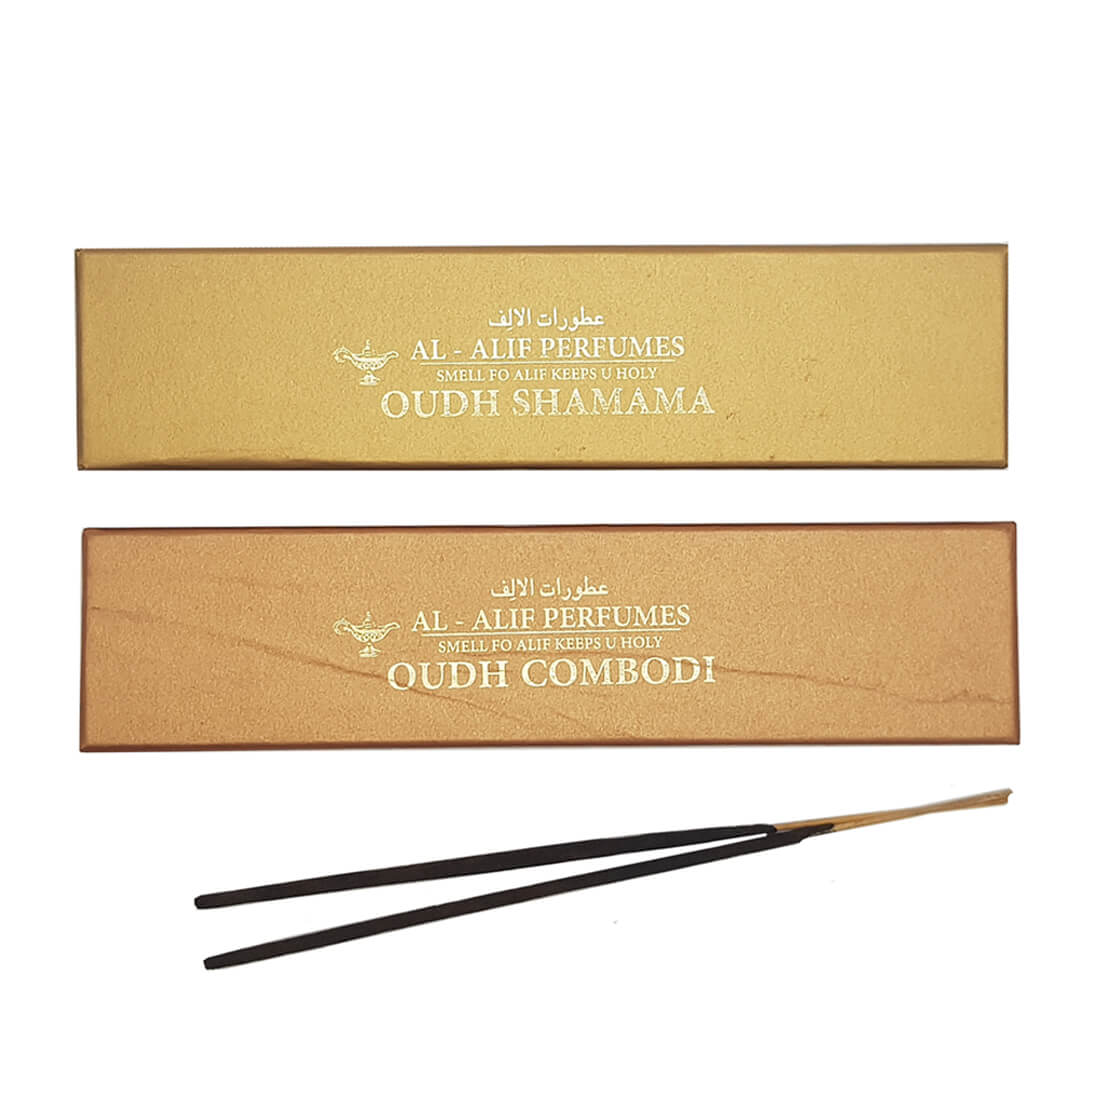 Combodi Oudh and Shamama Oudh Handmade Masala Agarbatti Incense Sticks - 50g